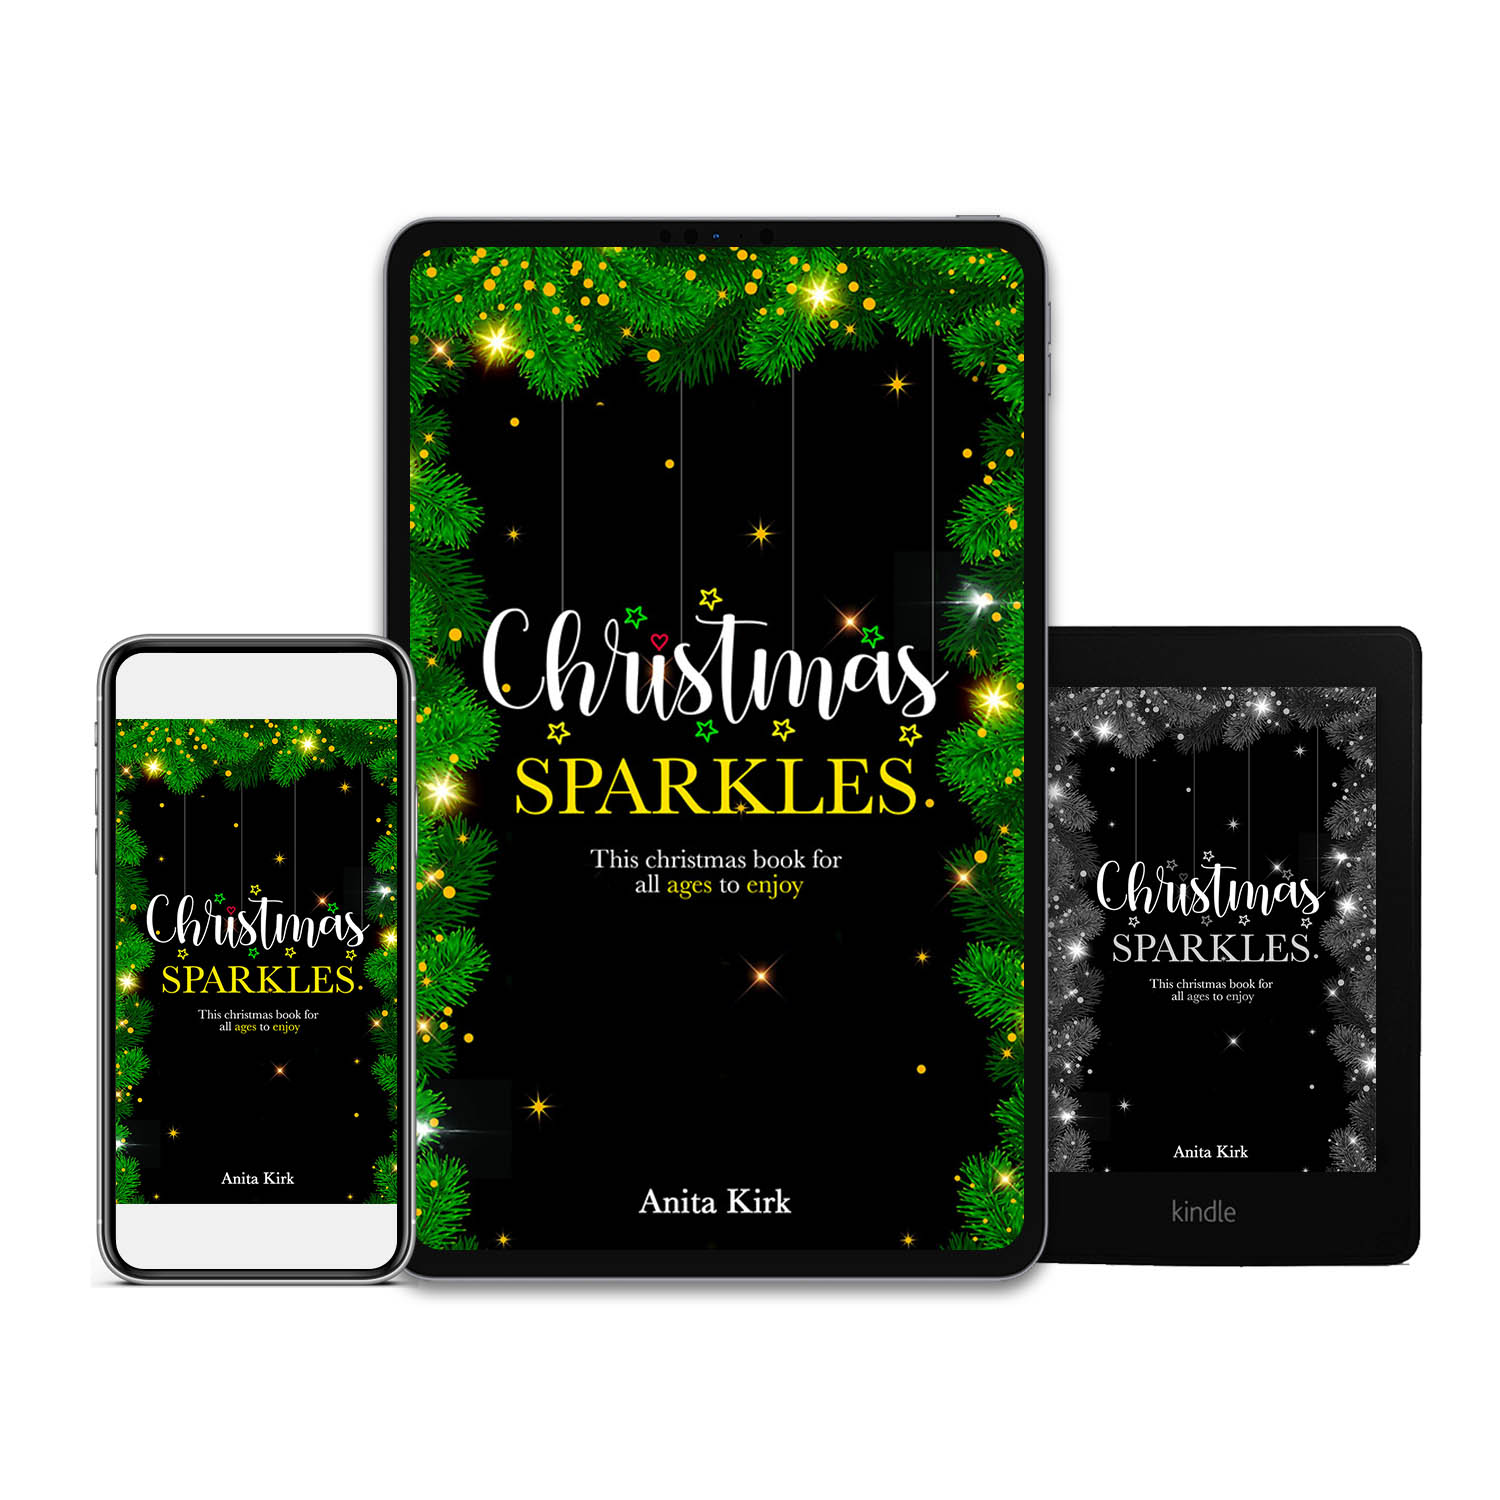 bookconsilio-portfolio-Chritmas-sparkles-ebookcoverdesign-